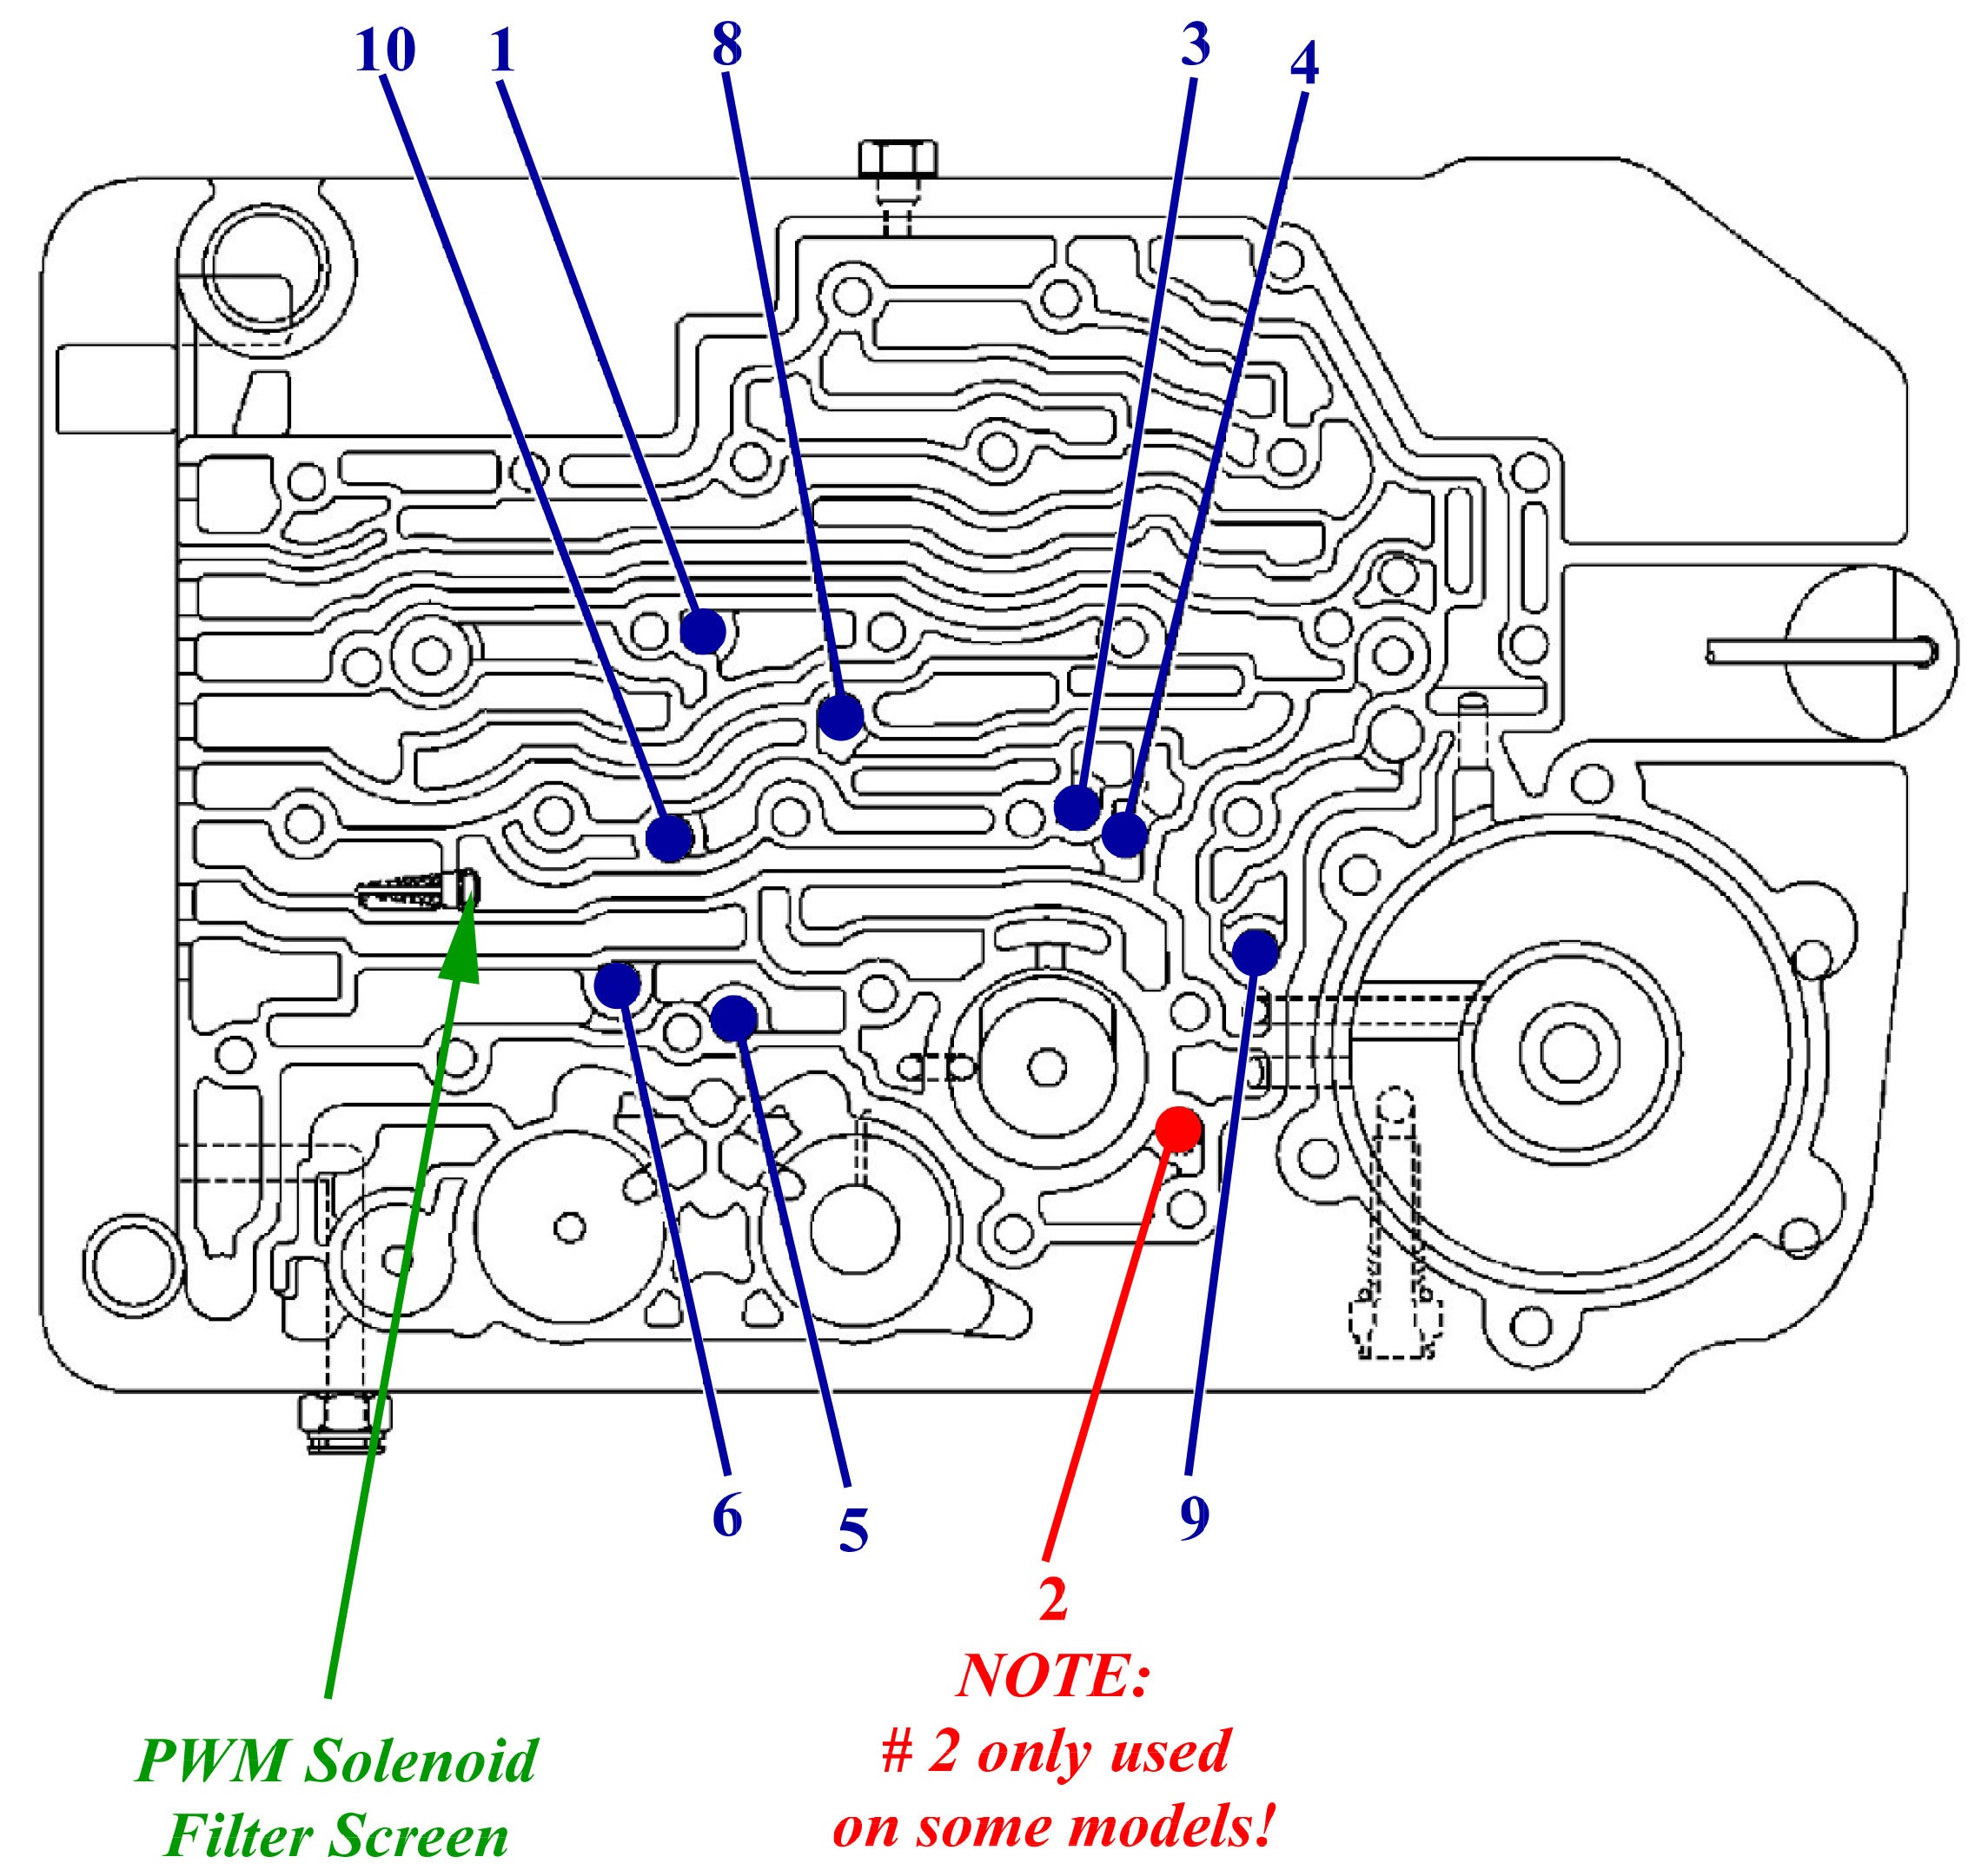 2013 ford Escape Engine Diagram 4r100 Transmission Valve Body Diagram E4od Parts Diagram Wiring Of 2013 ford Escape Engine Diagram